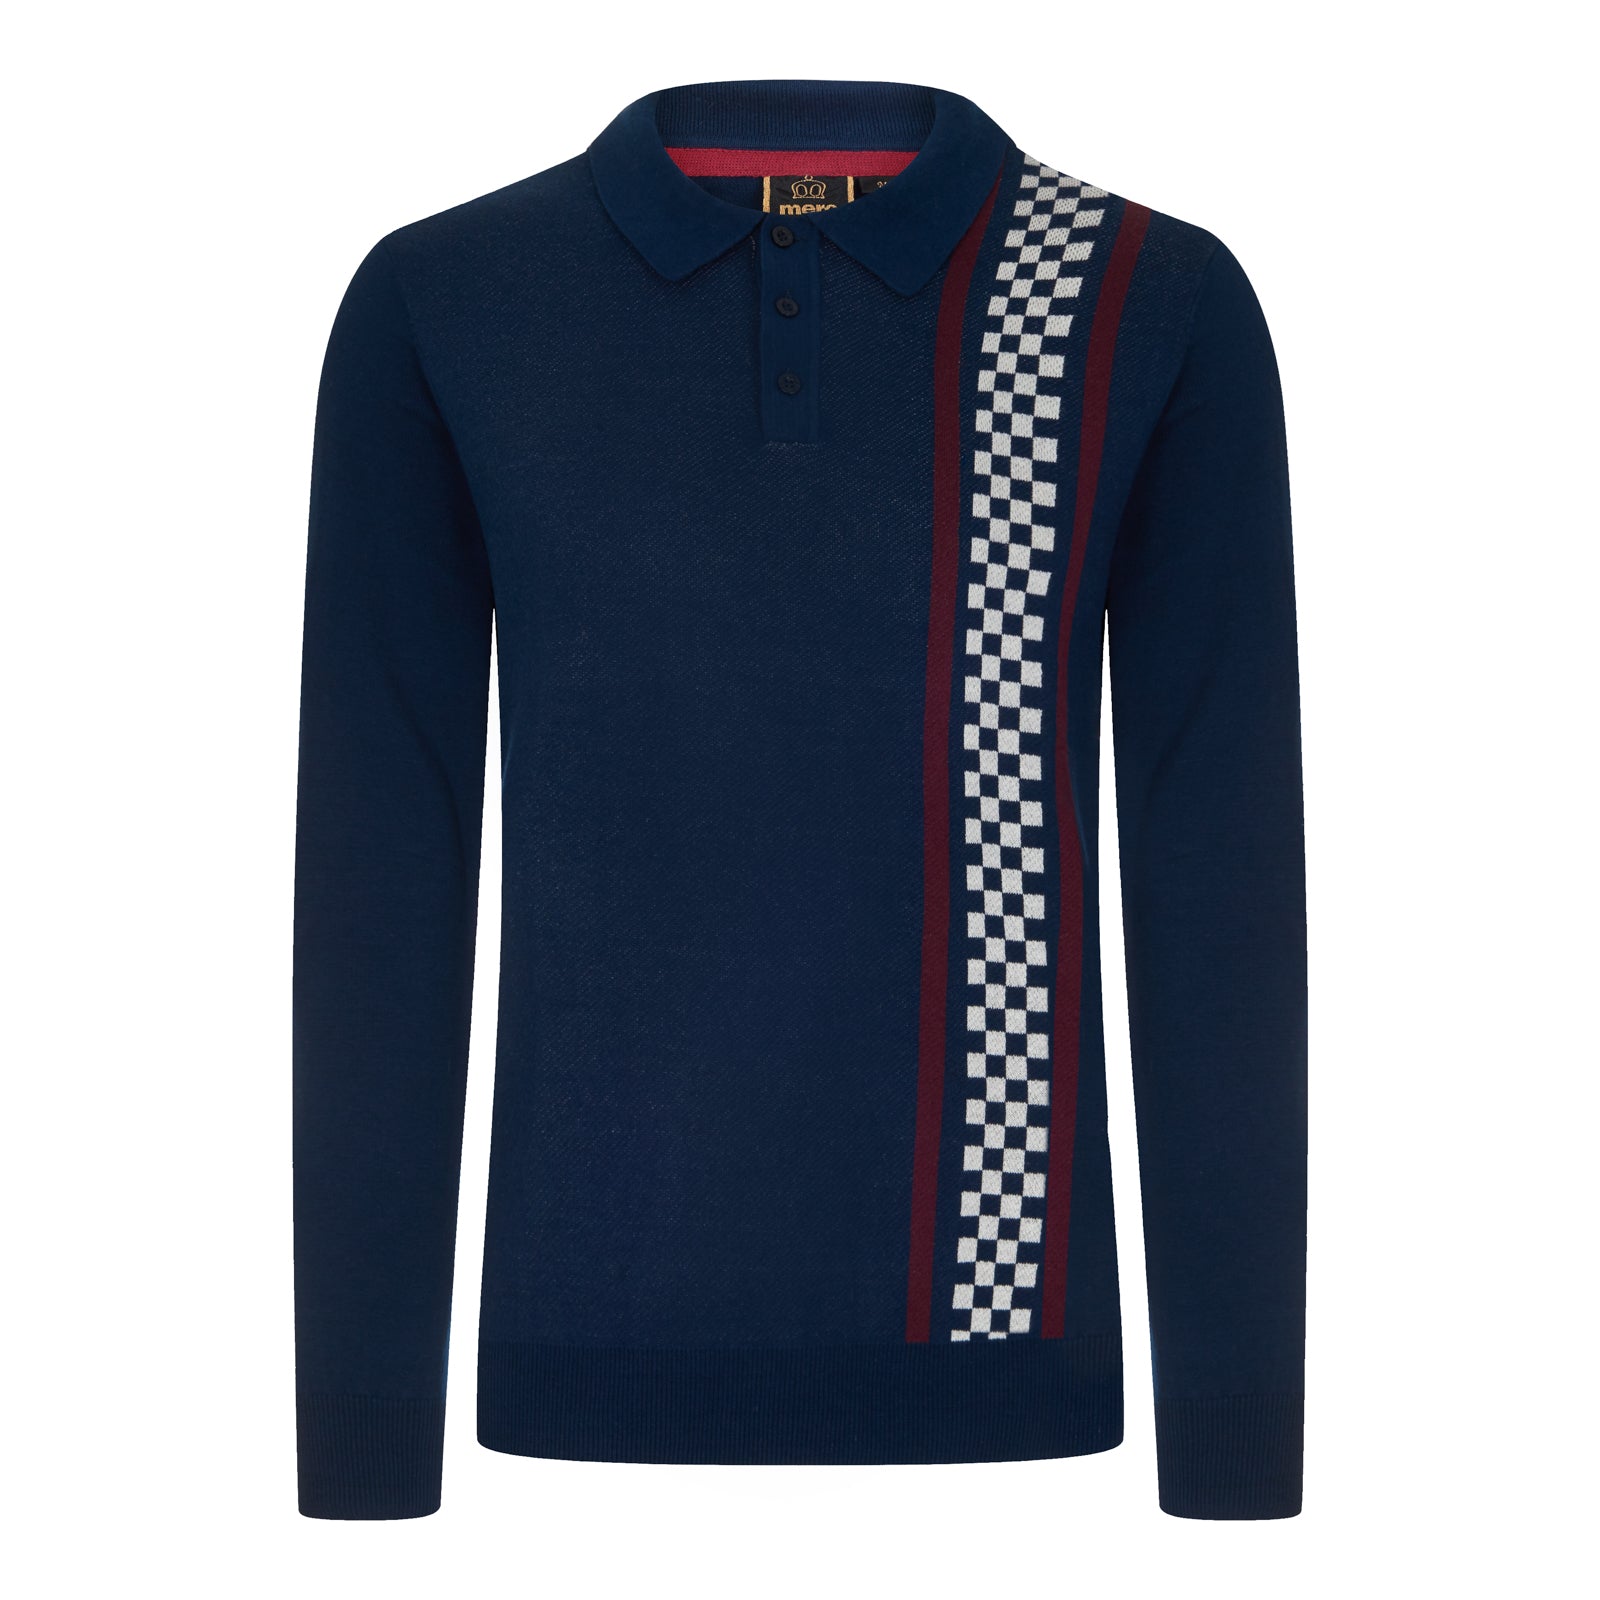 Tathwell Knitted Striped Polo - Merc London